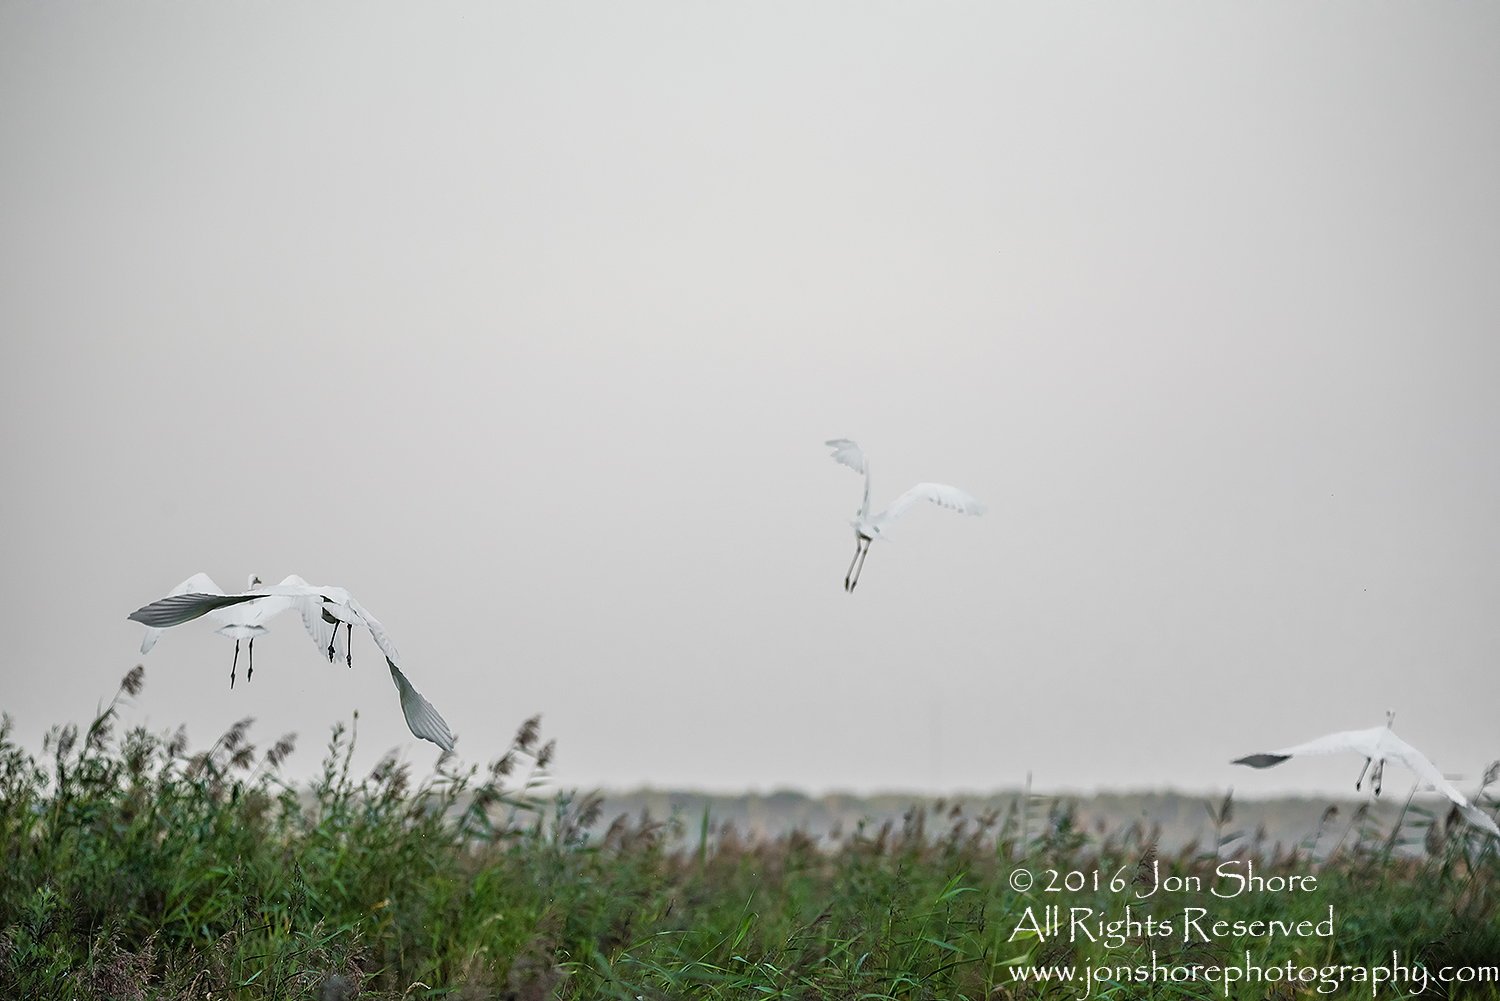 Great White Egret at Sunrise- Summer - Burtnieks, Latvia Tamron 600mm Lens